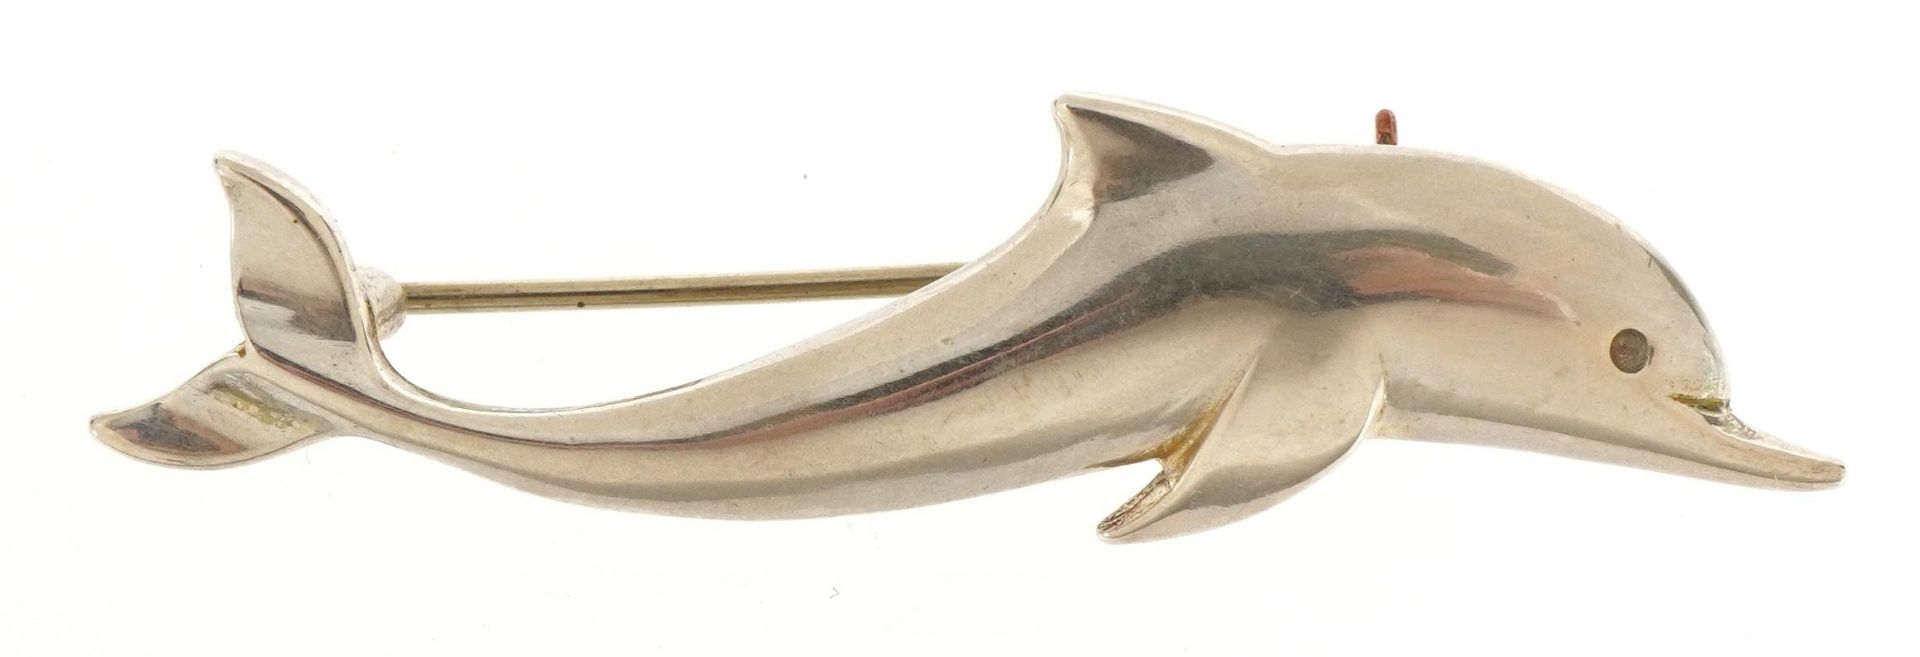 Silver dolphin bar brooch, 4.5cm in length, 3.6g